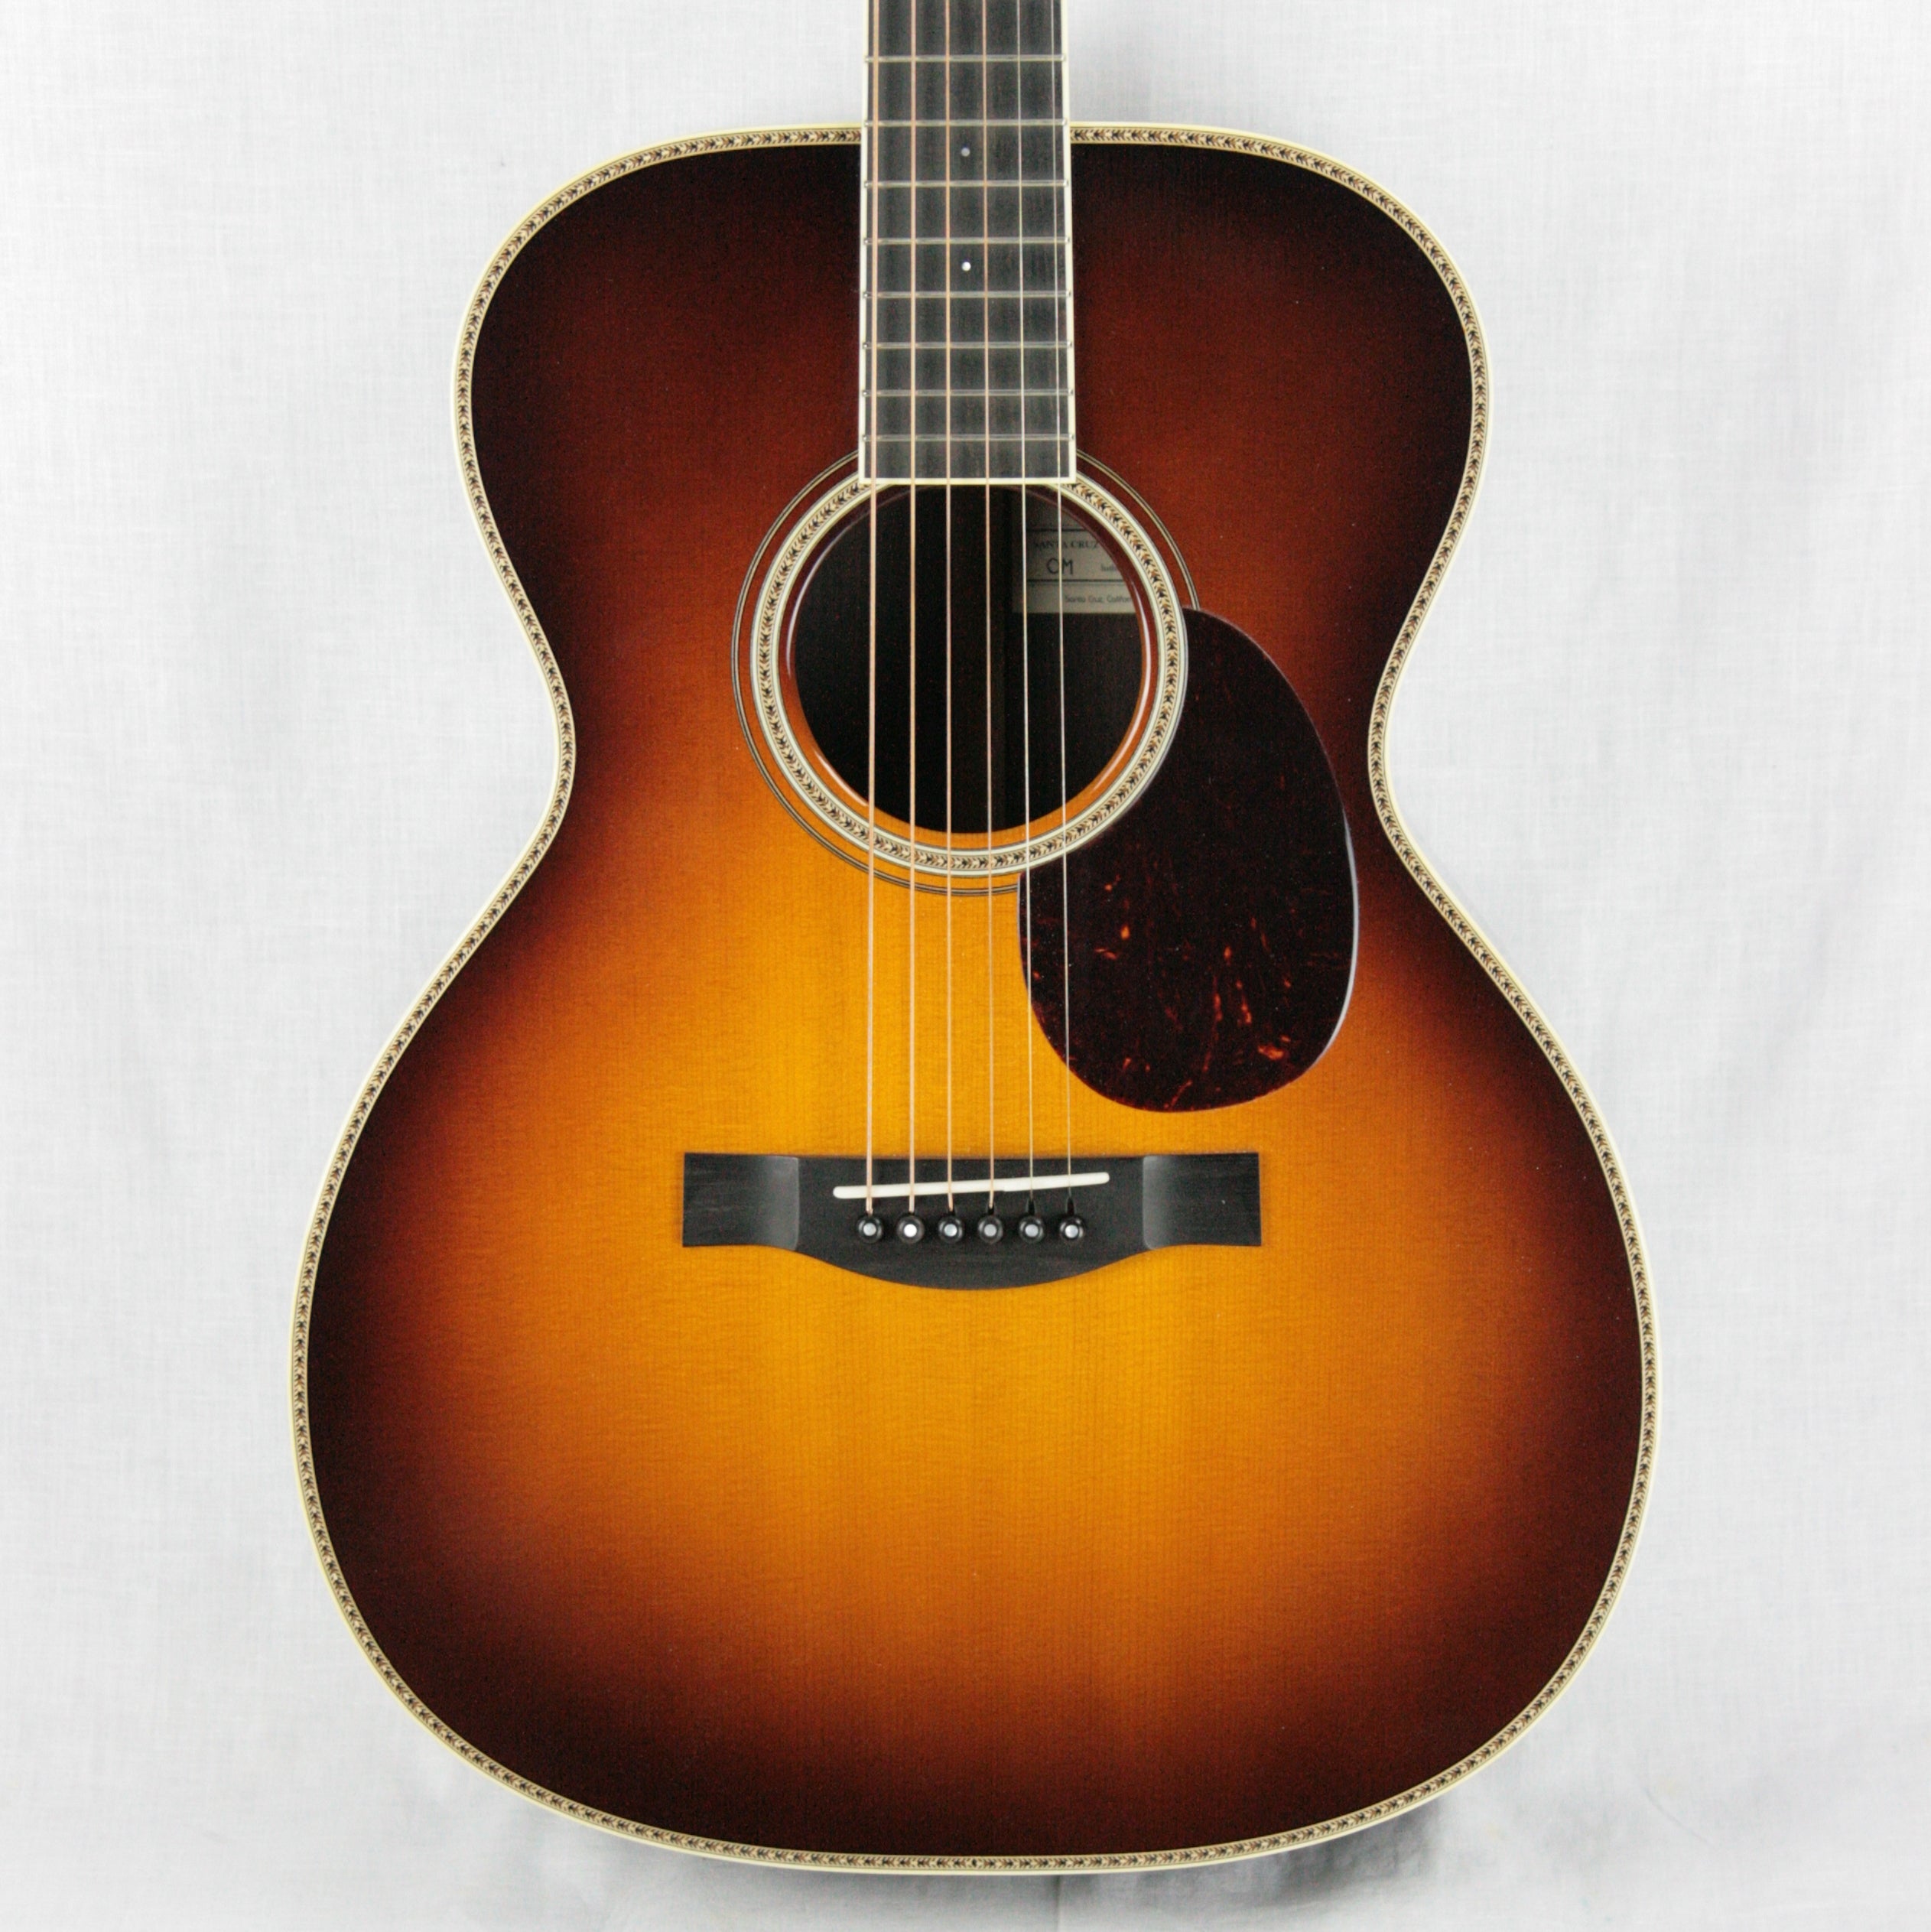 *SOLD*  2014 Santa Cruz OM Custom Southern Belle Sunburst Acoustic Guitar! Rosewood 000 d